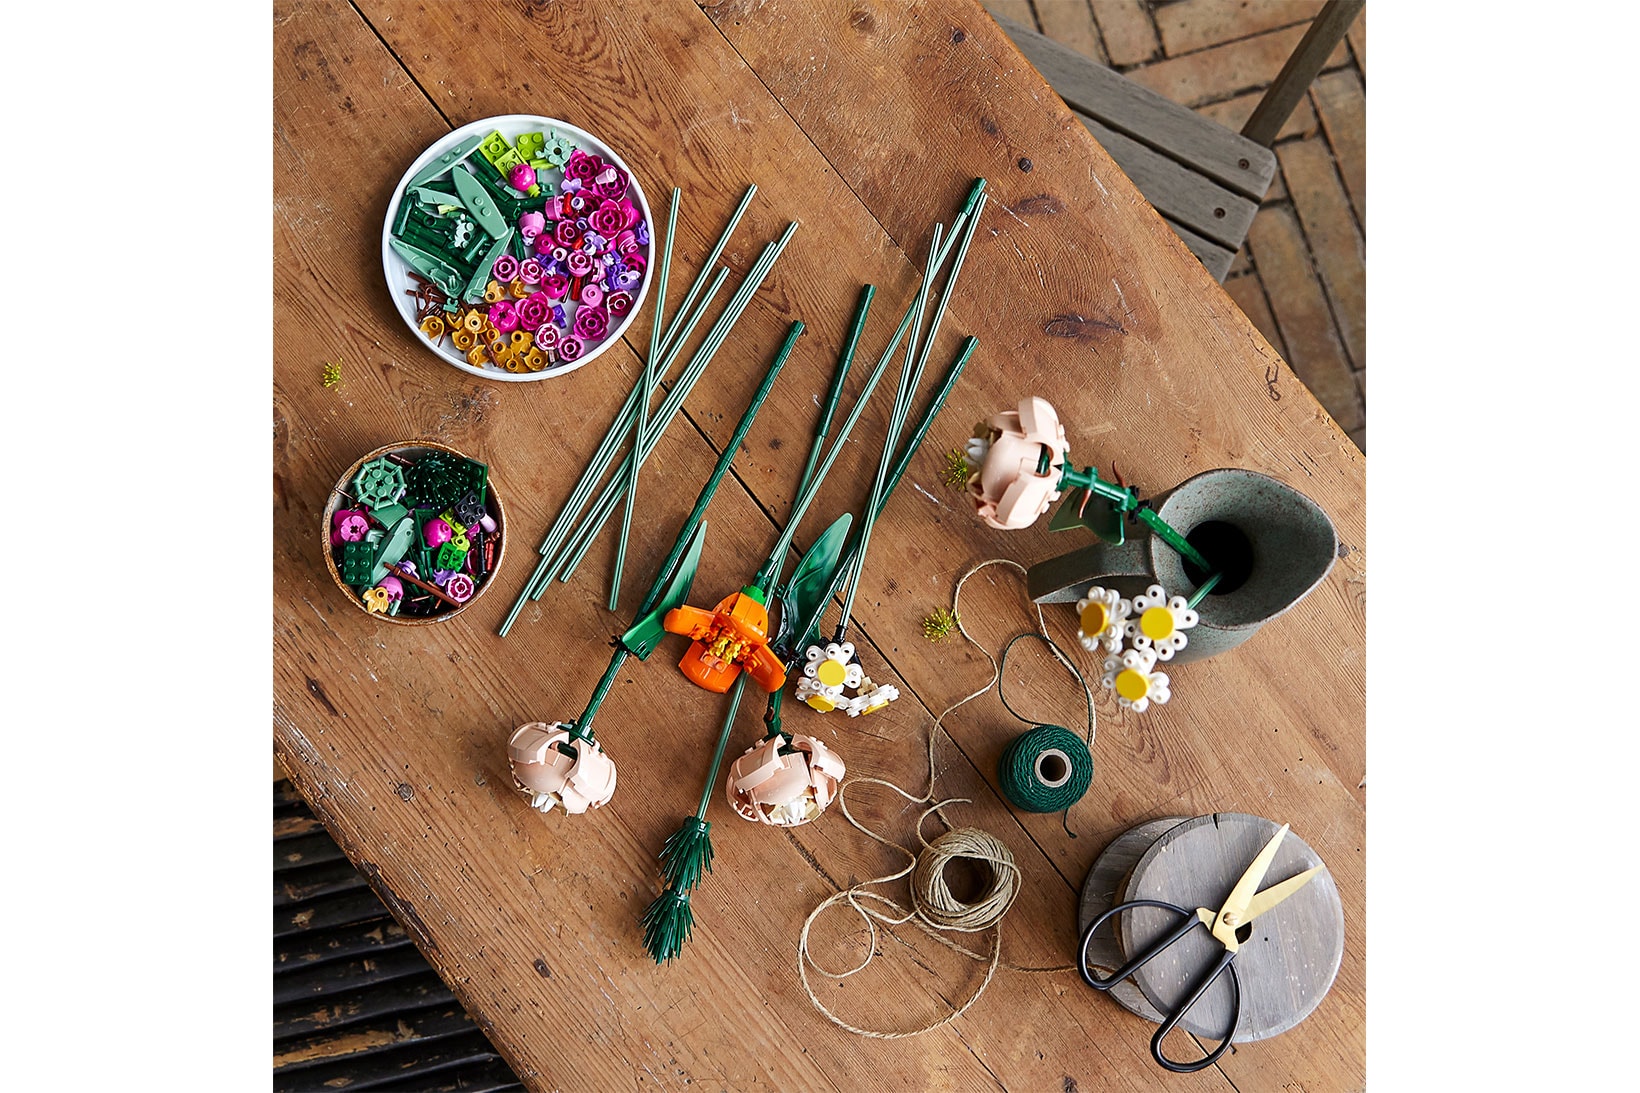 lego botanical collection flowers arragements figures toys collectibles